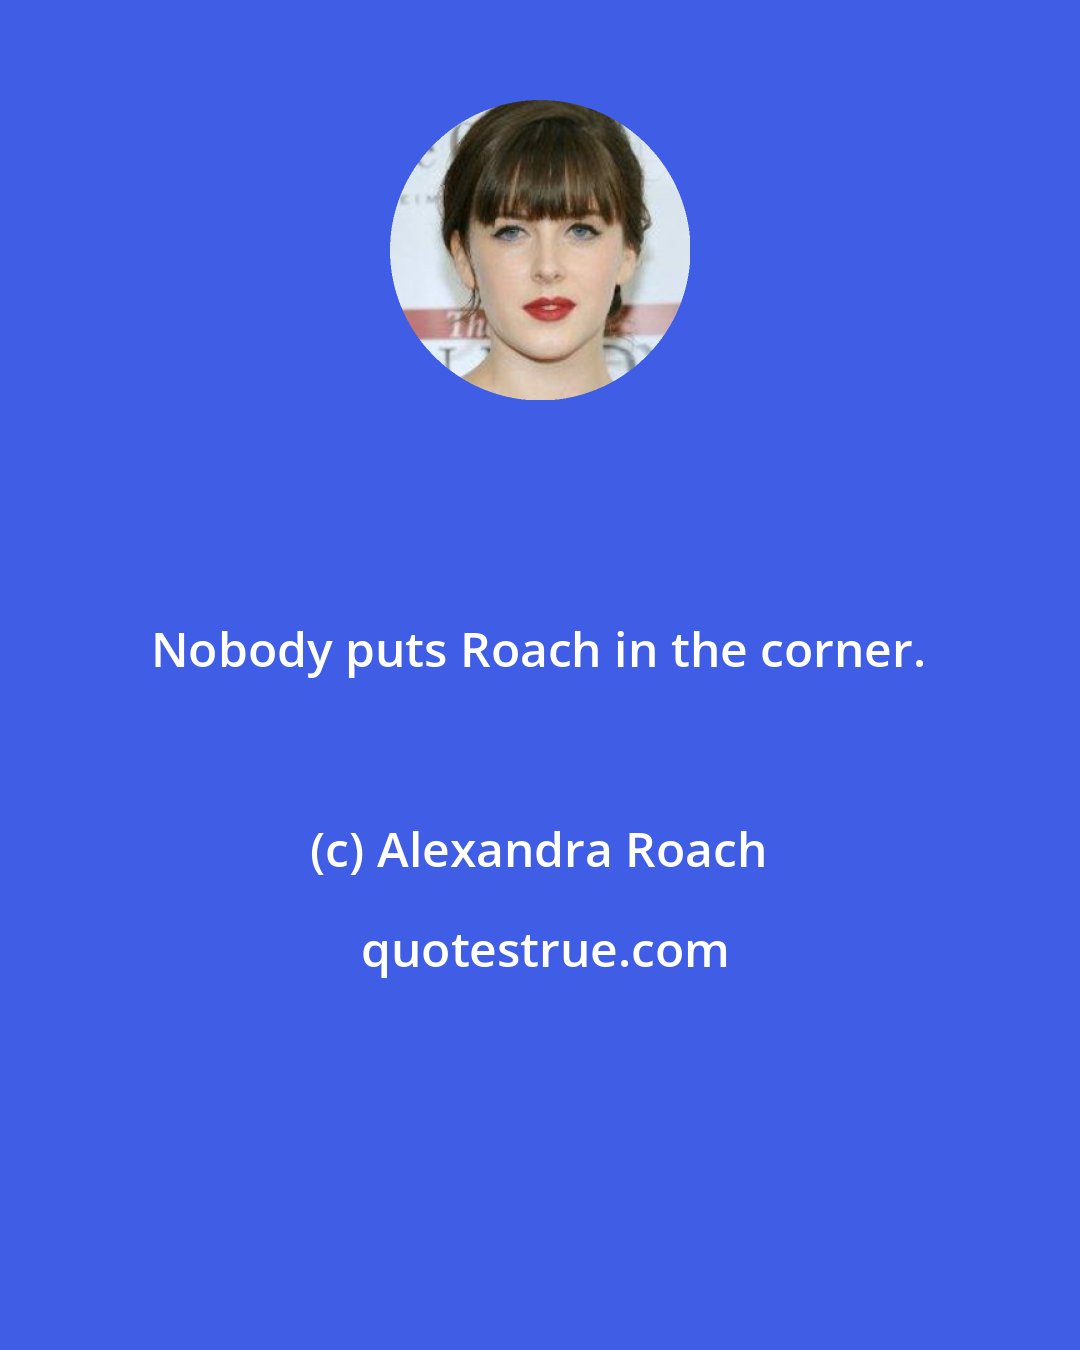 Alexandra Roach: Nobody puts Roach in the corner.